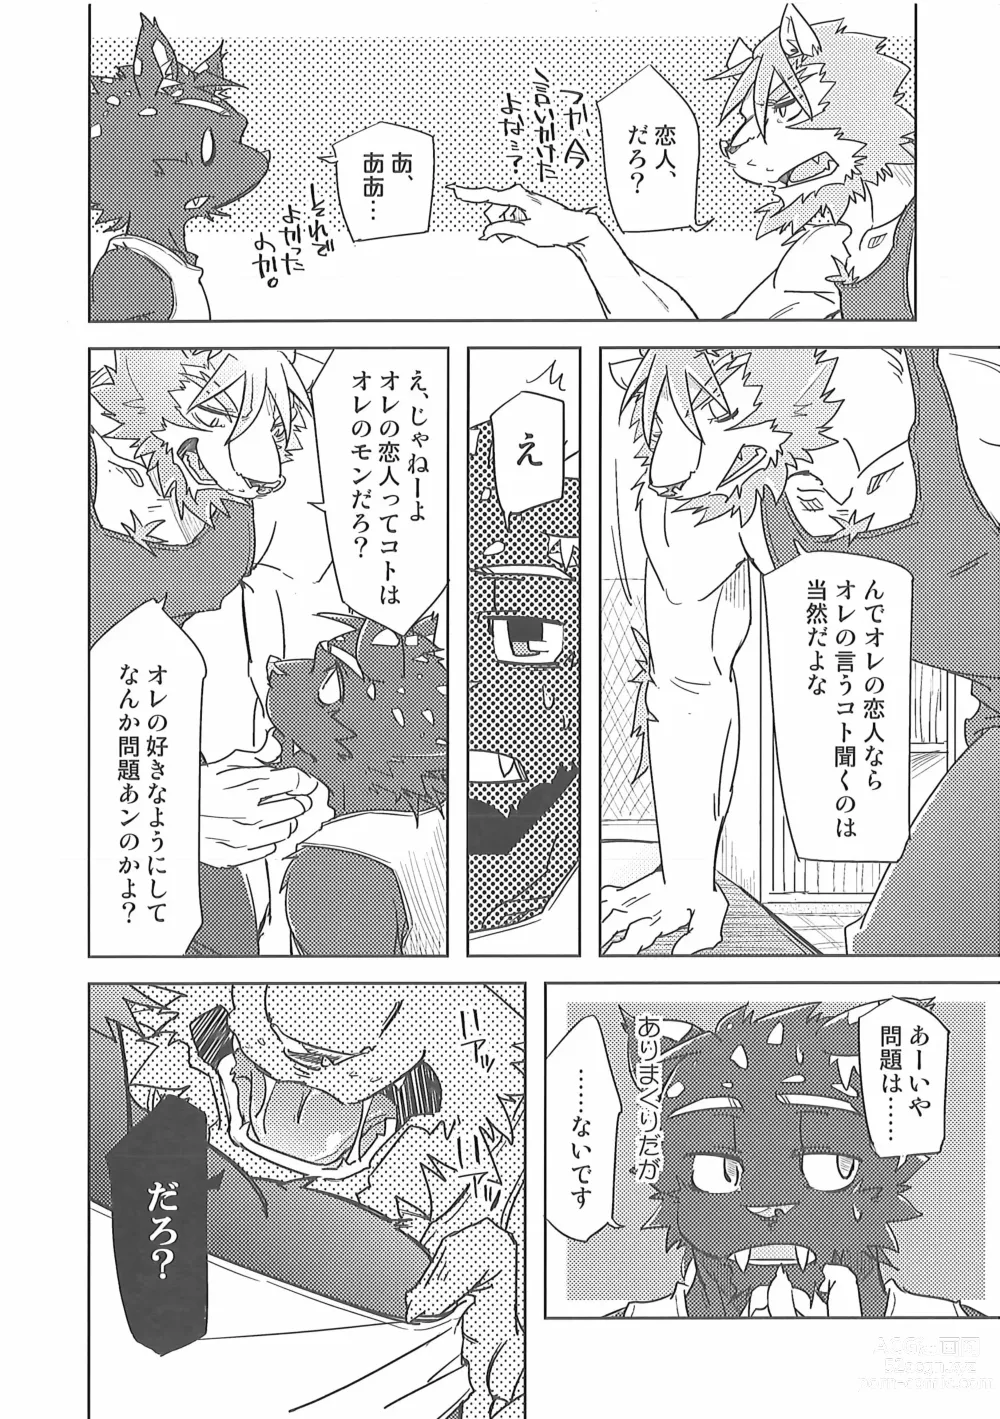 Page 19 of doujinshi Crazy Waltz